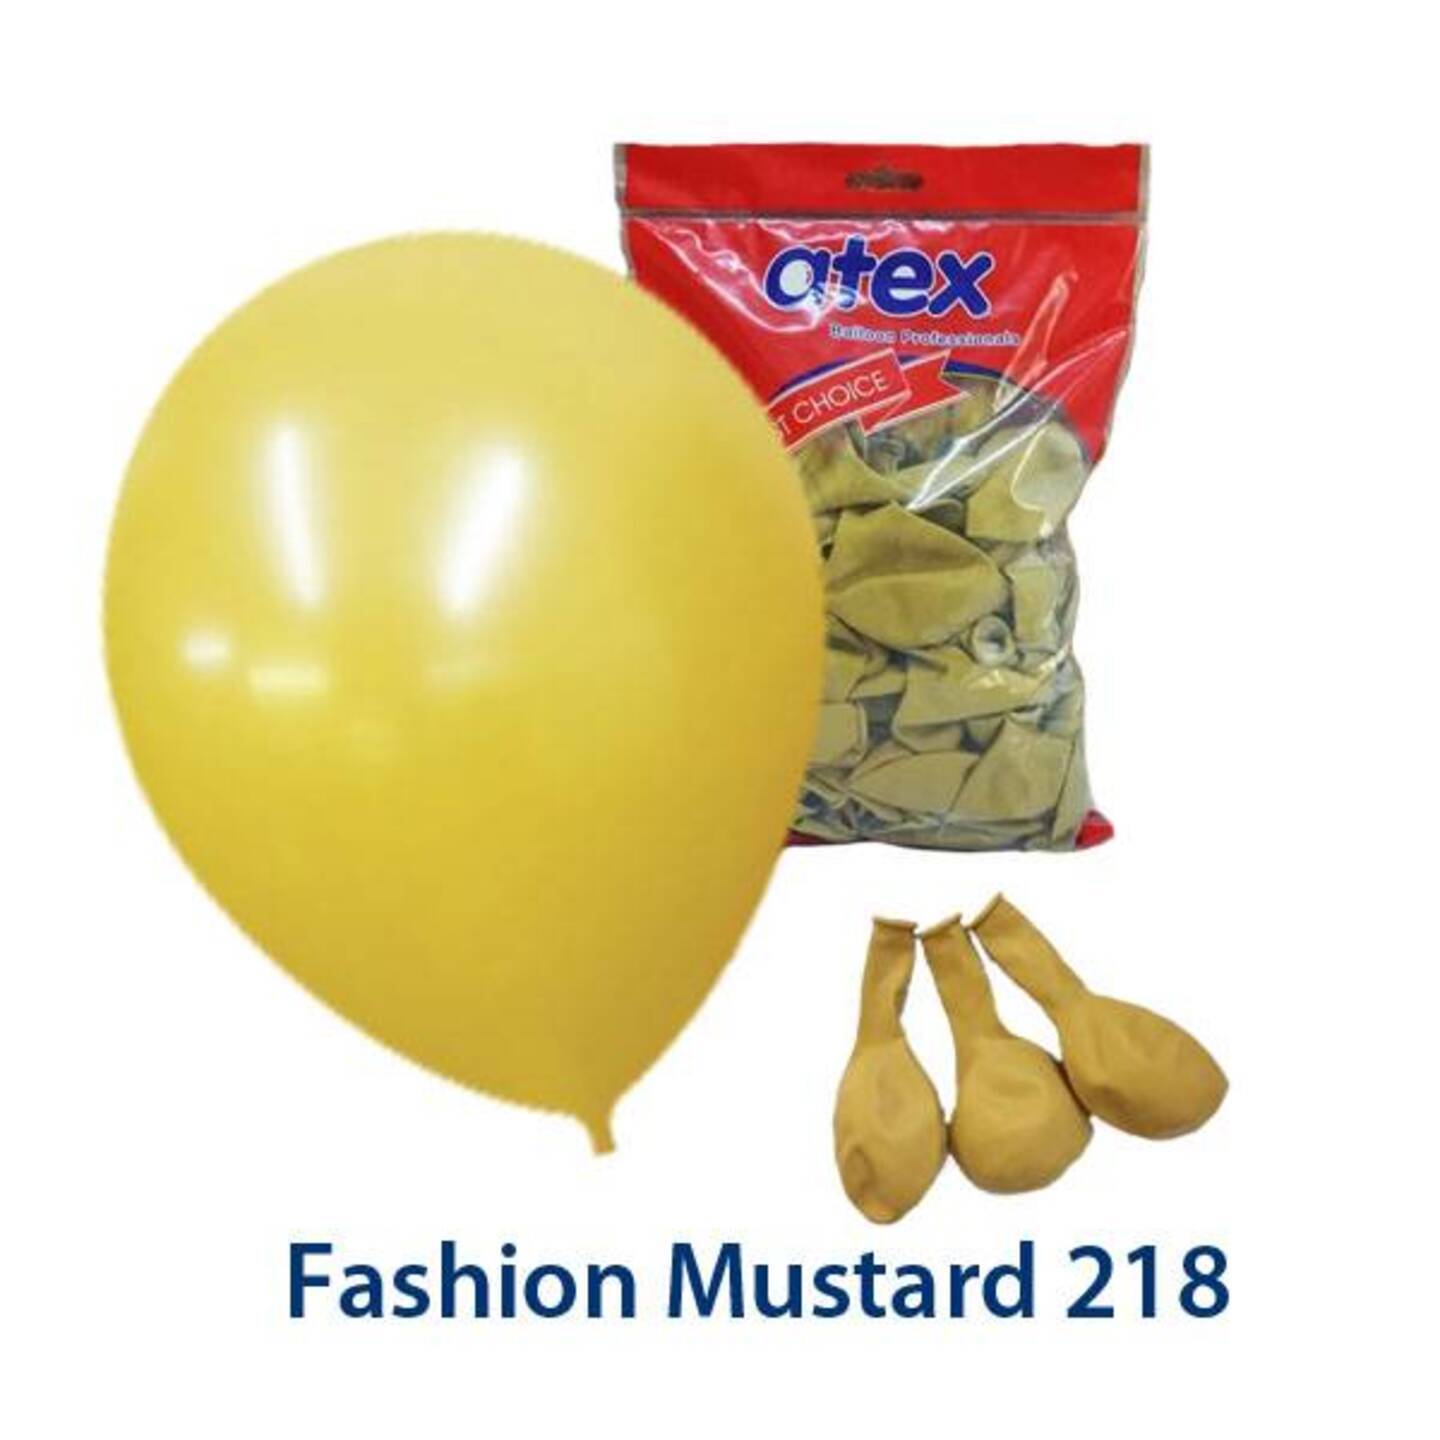 Fashion Mustard 218